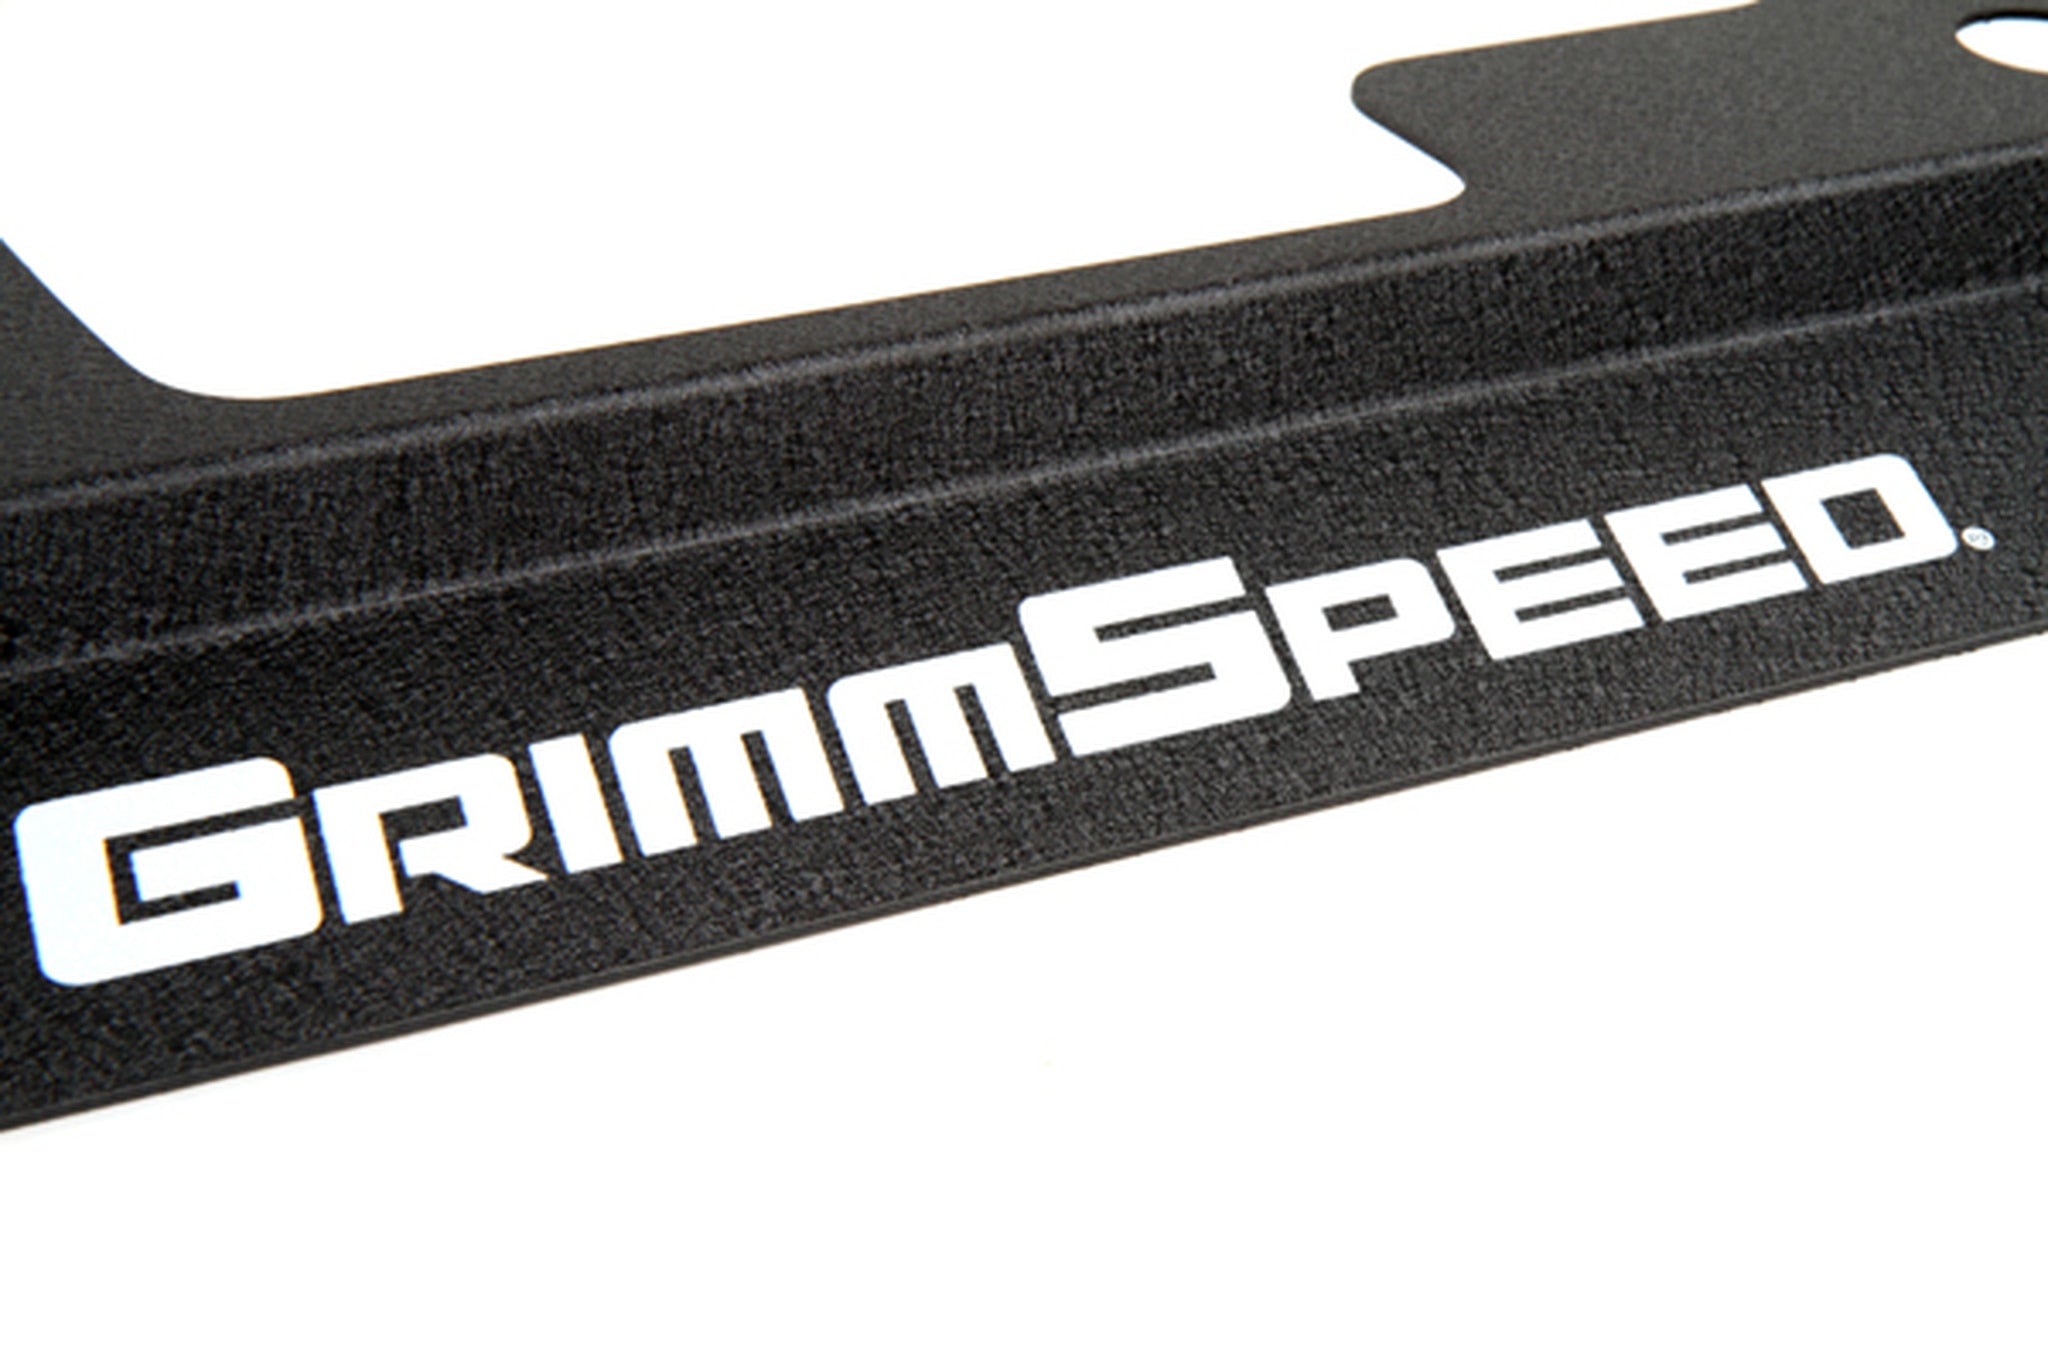 GrimmSpeed - Radiator Shroud w/Tool Tray - Black - 02-07 Subaru Impreza/WRX/STI on Bleeding Tarmac